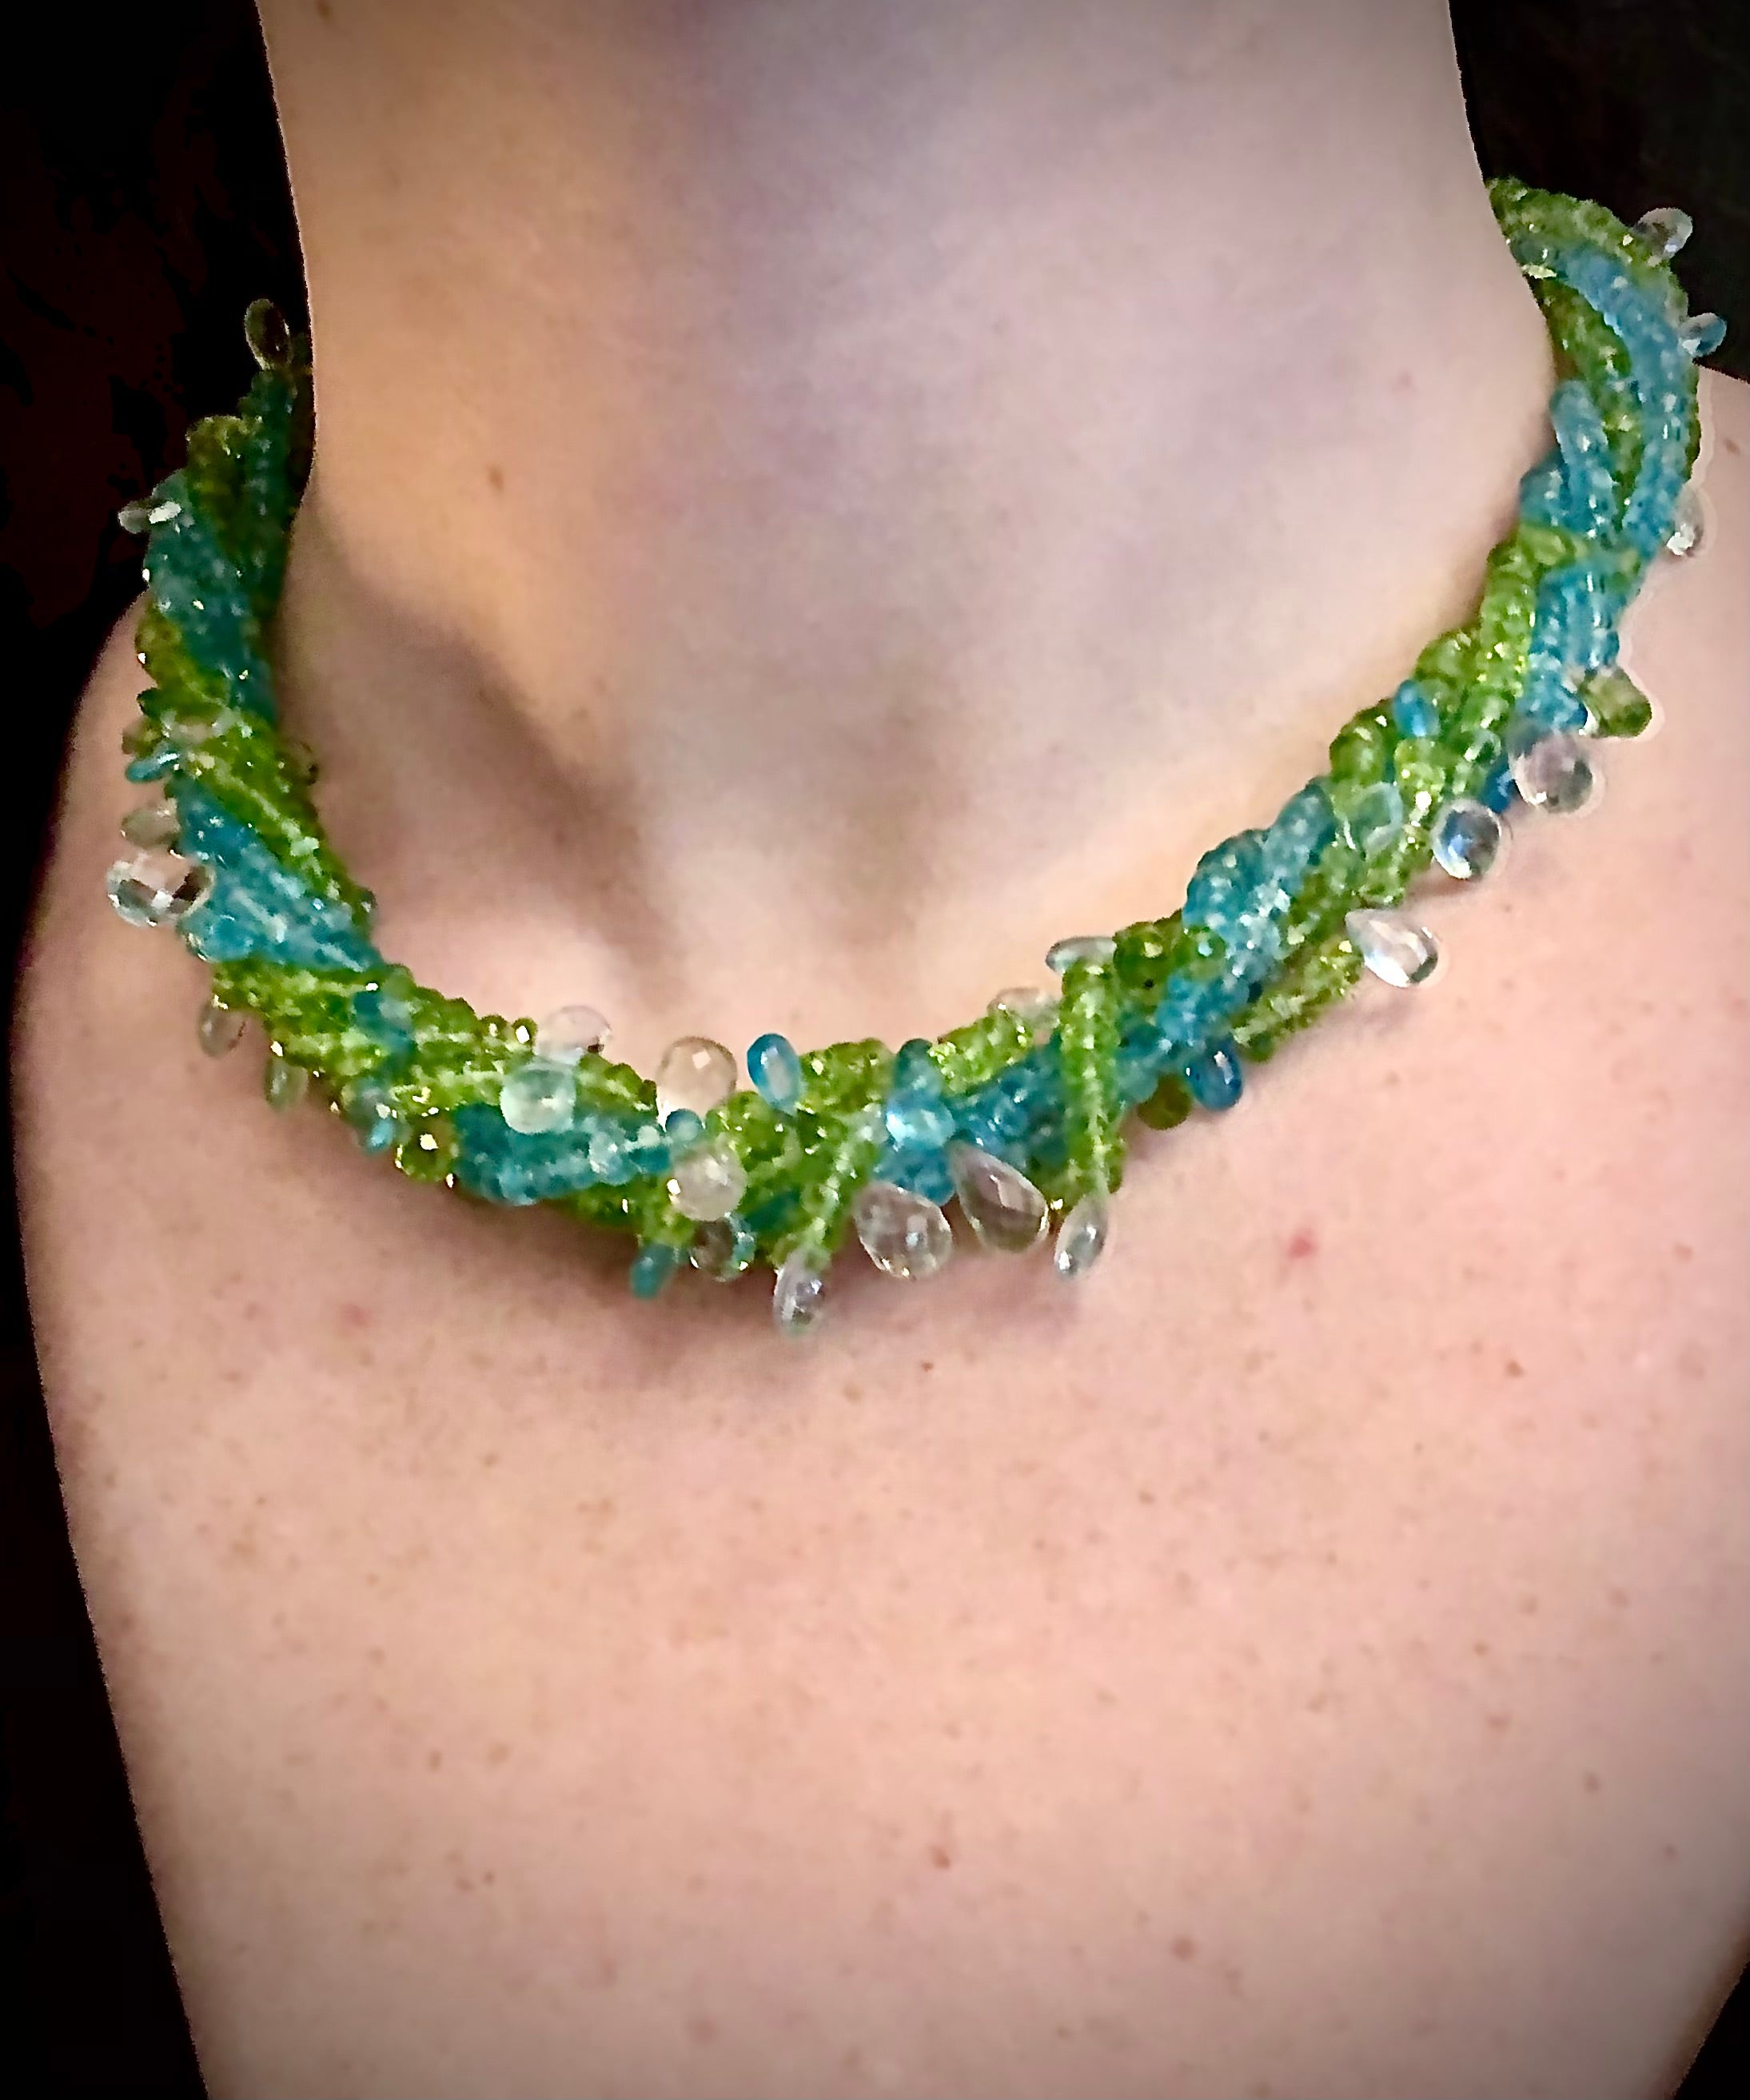 Earth Sky and Raindrops necklace - Green Peridot + Blue Aquamarine